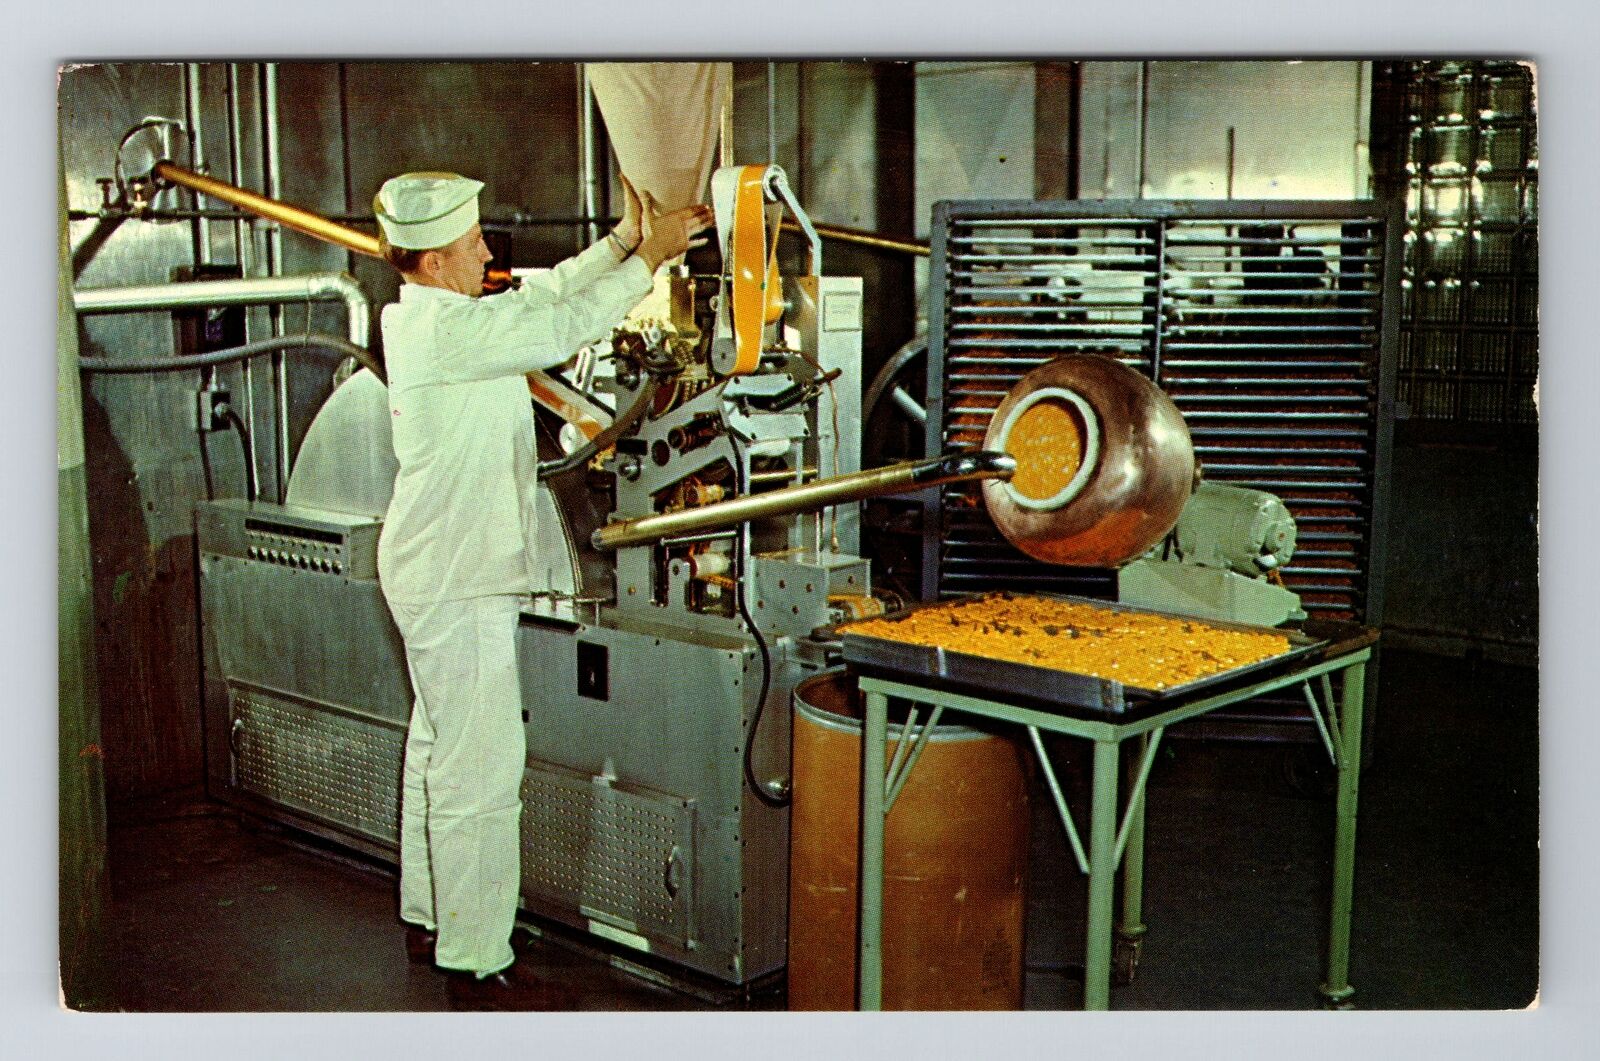 Pearl River NY-New York, Lederle Laboratories, Cyanamid Vintage Postcard